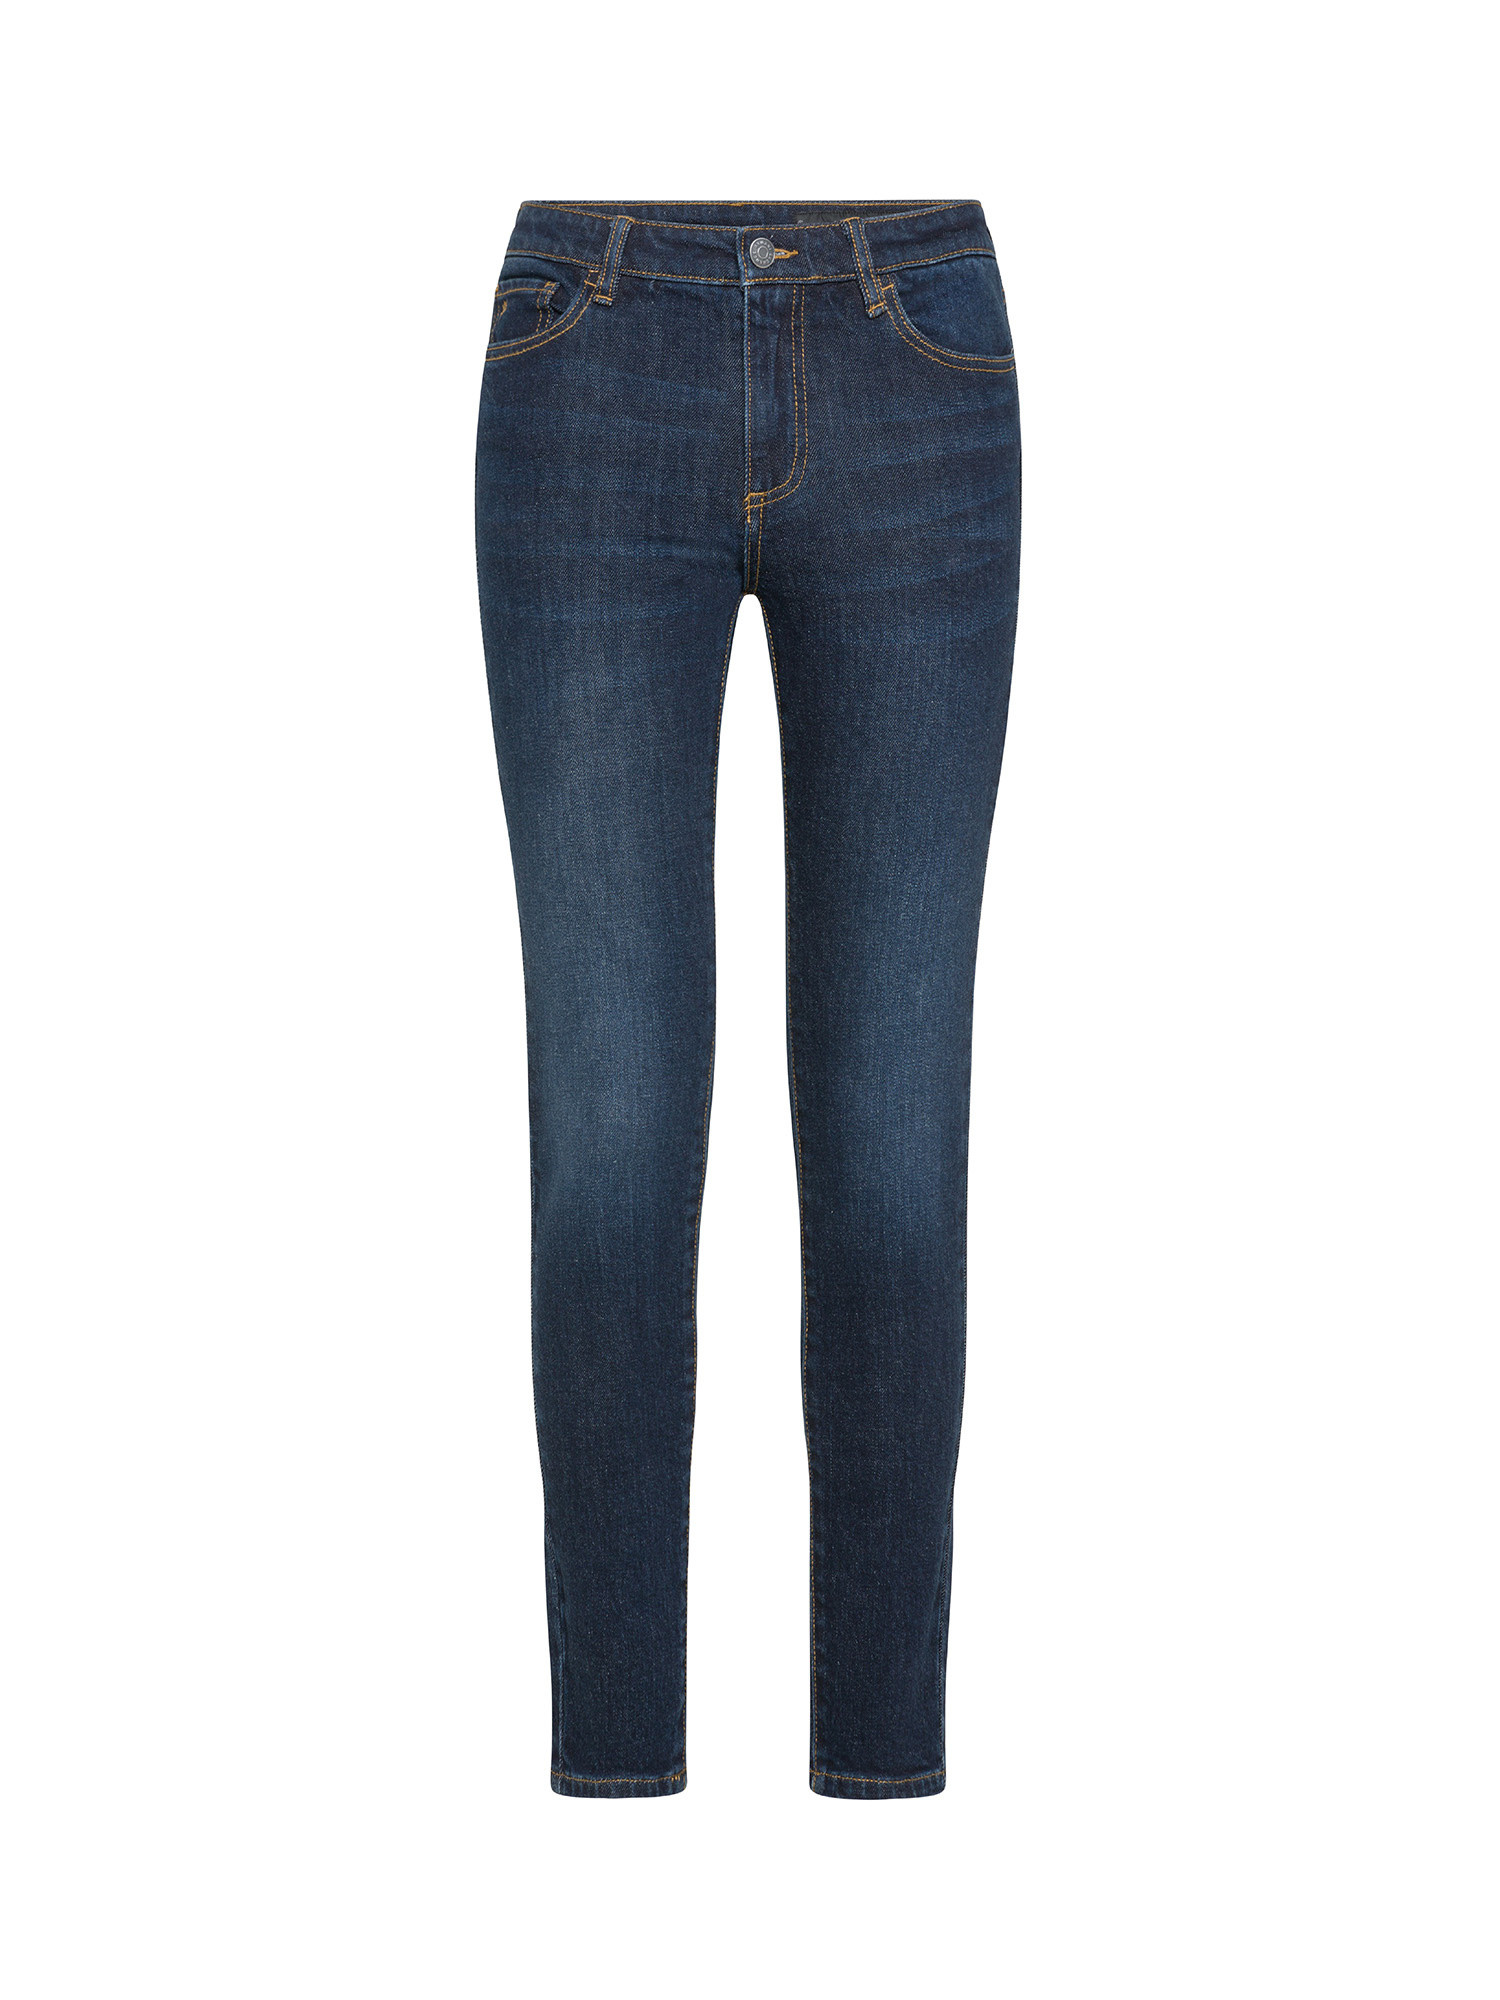 Armani Exchange - Jeans cinque tasche, Denim, large image number 0